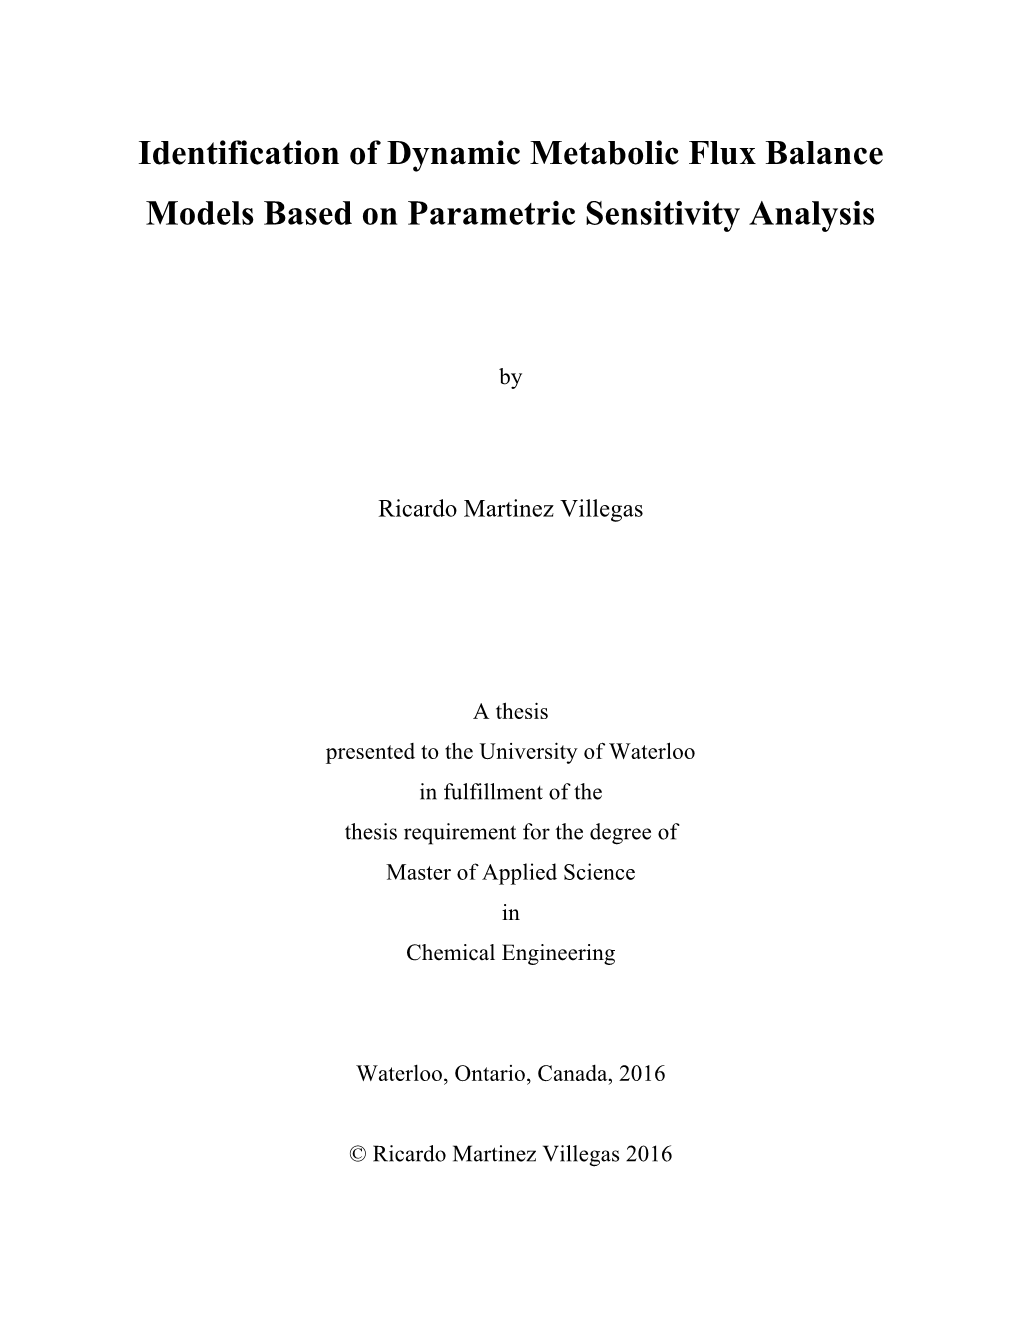 Identification of Dynamic Metabolic Flux Balance Models Based on Parametric Sensitivity Analysis